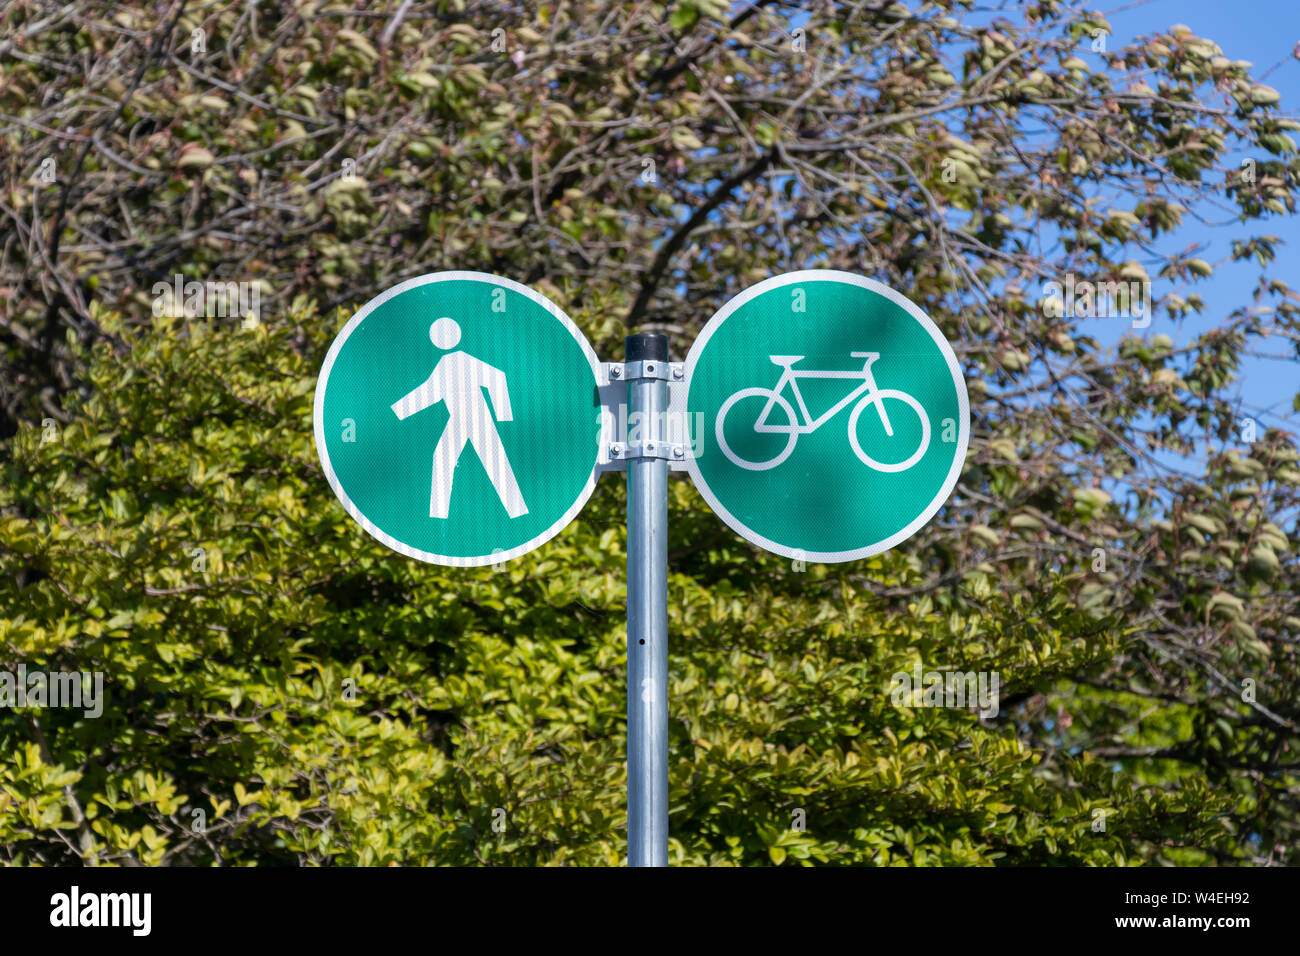 Joint walking path and bike lane sign. Stock Photo